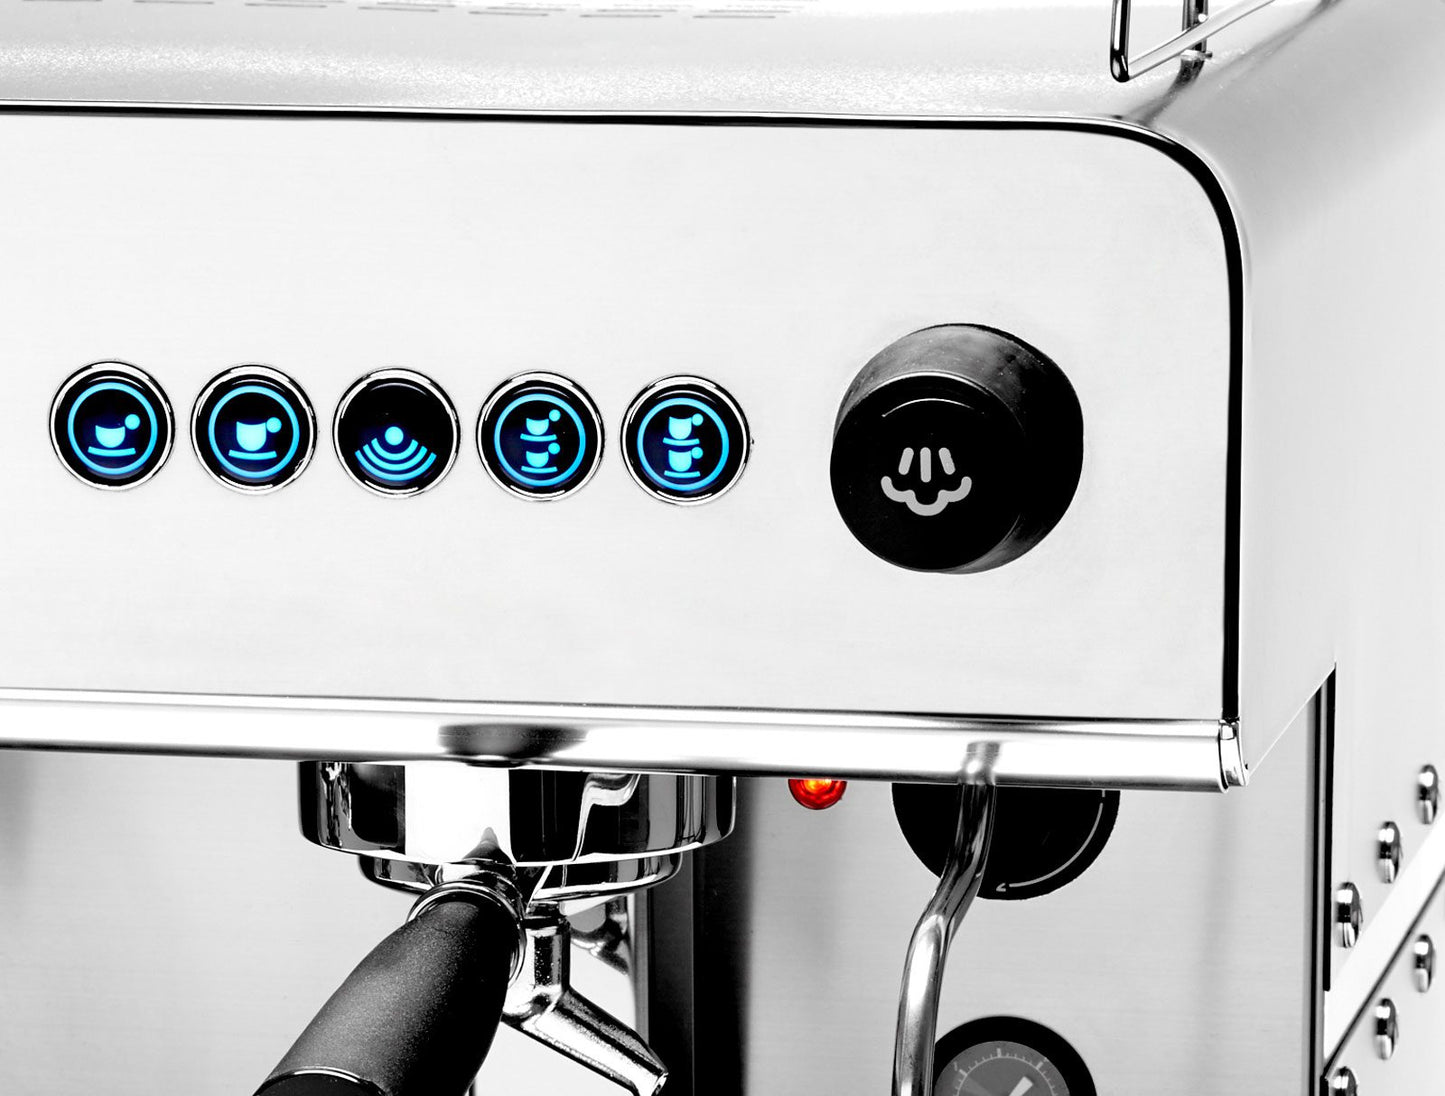 Iberital IB7 2 Group Automatic Espresso Machine